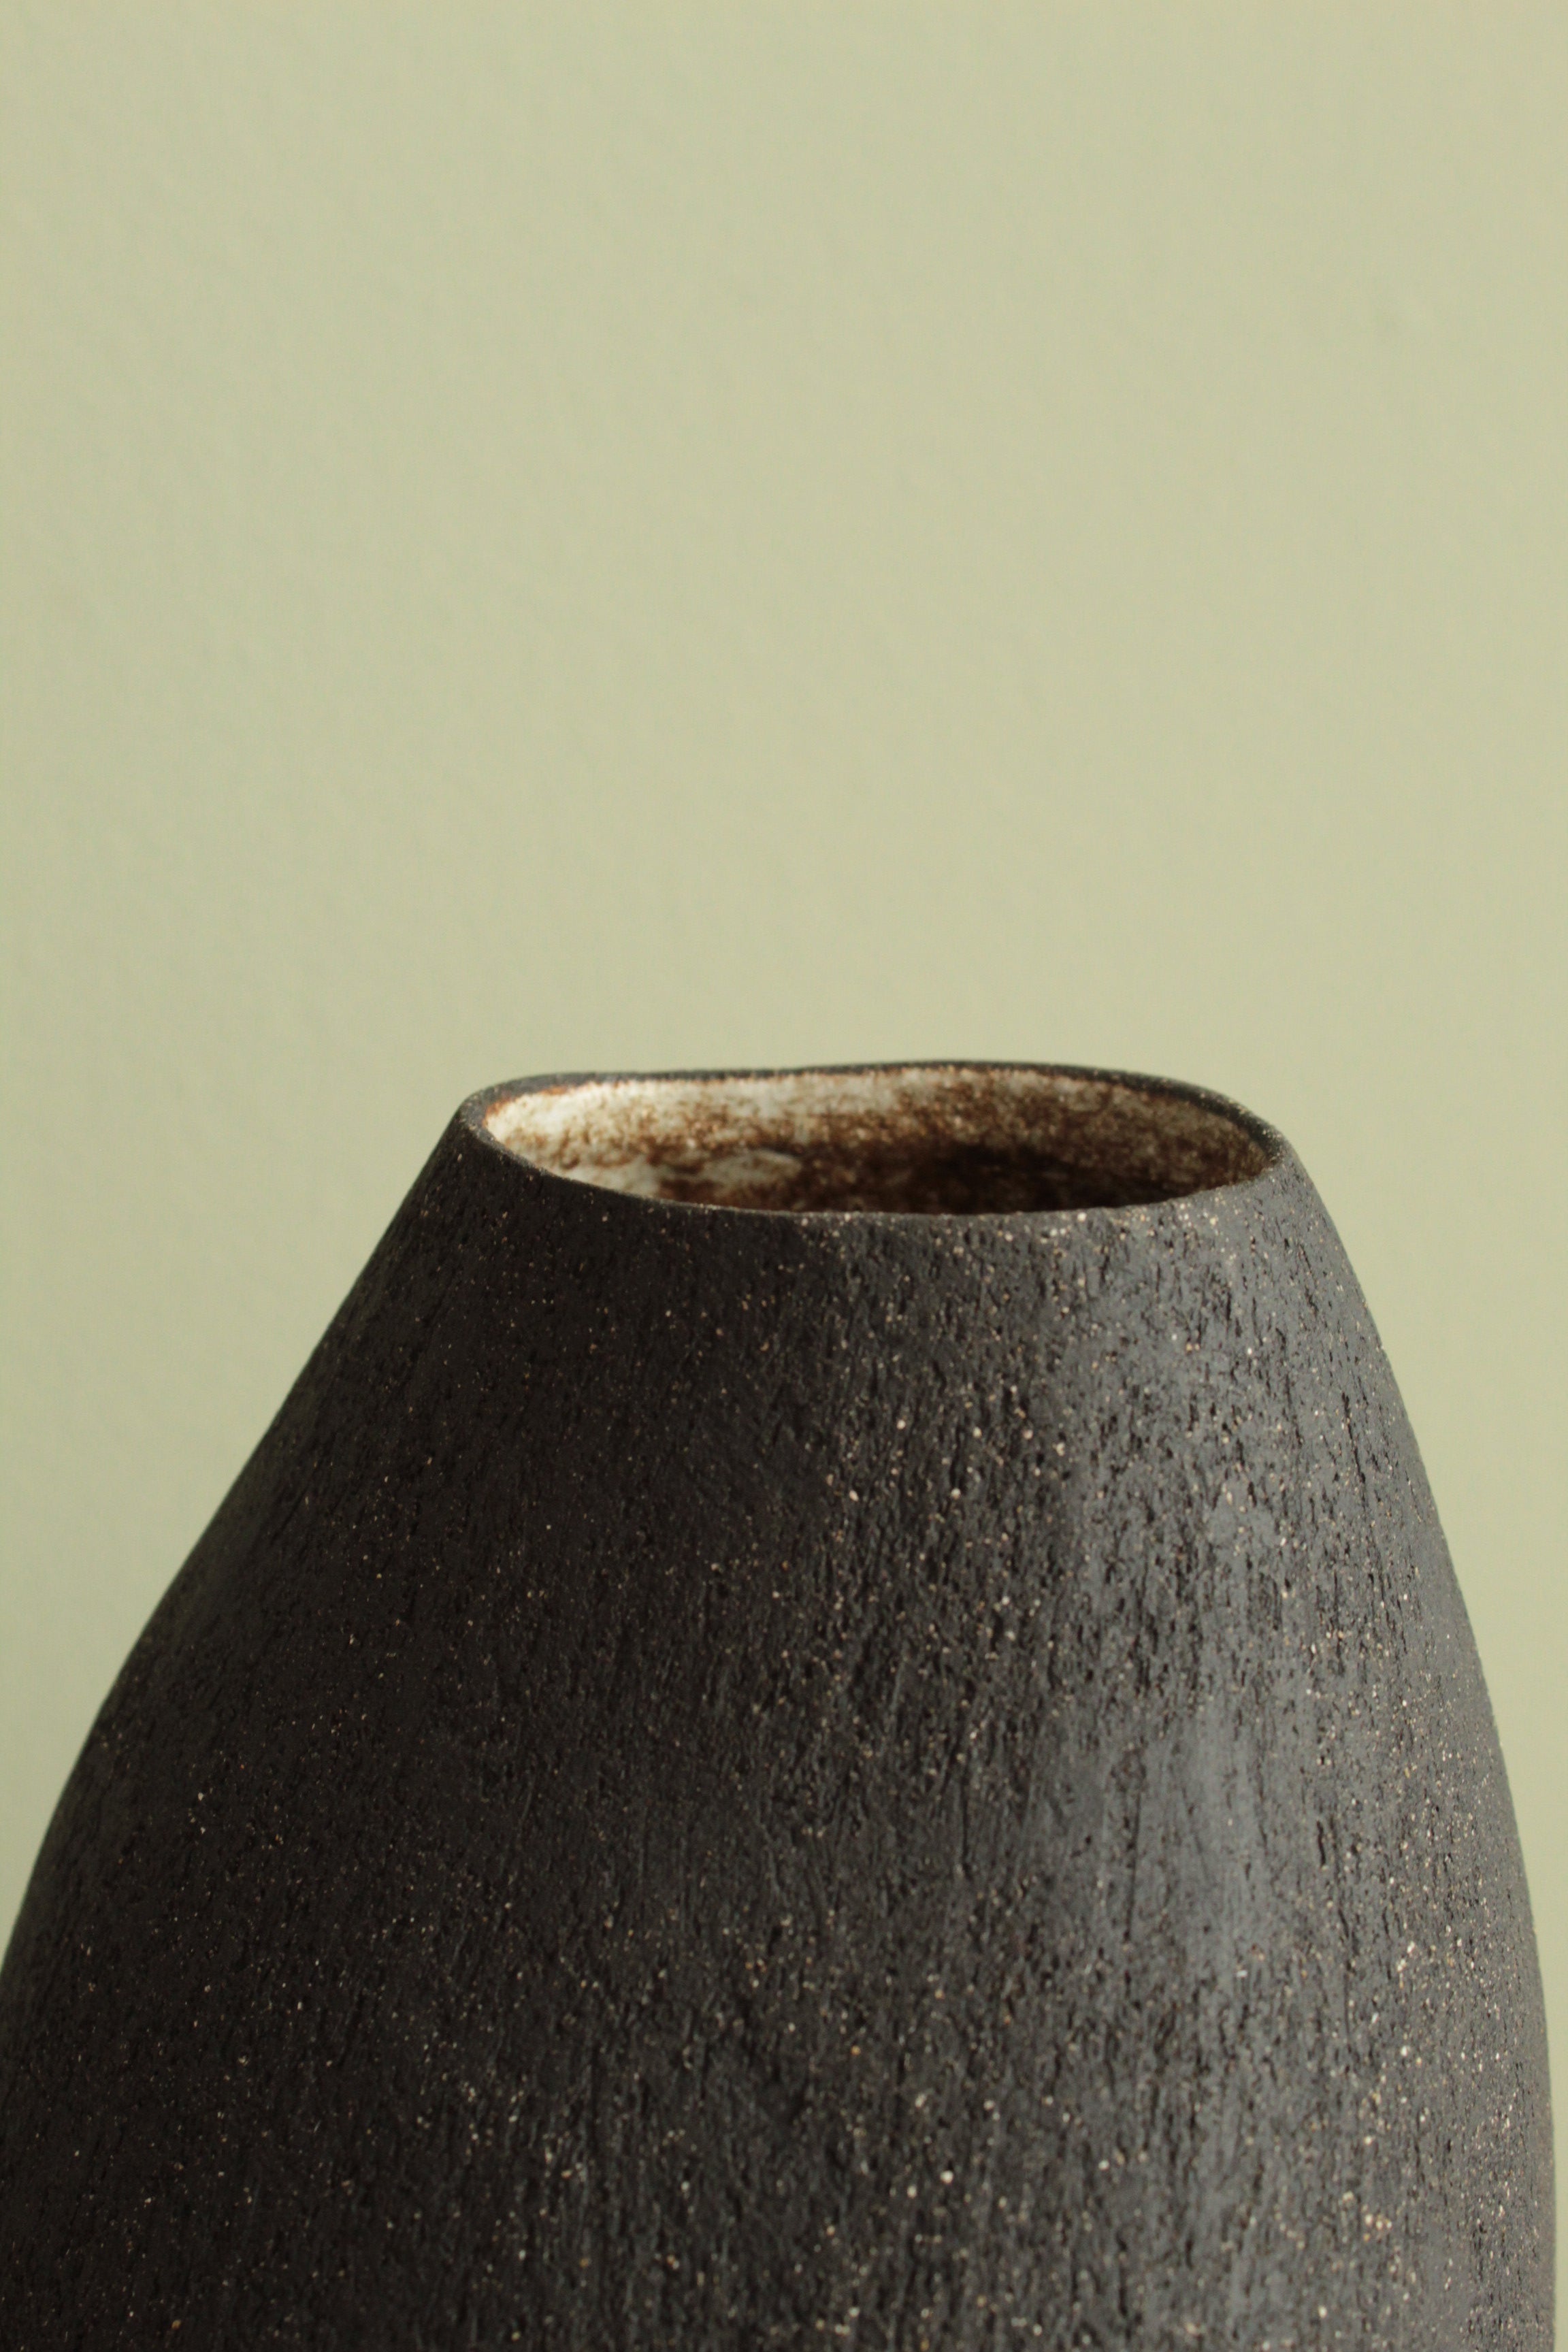 Black vase 2